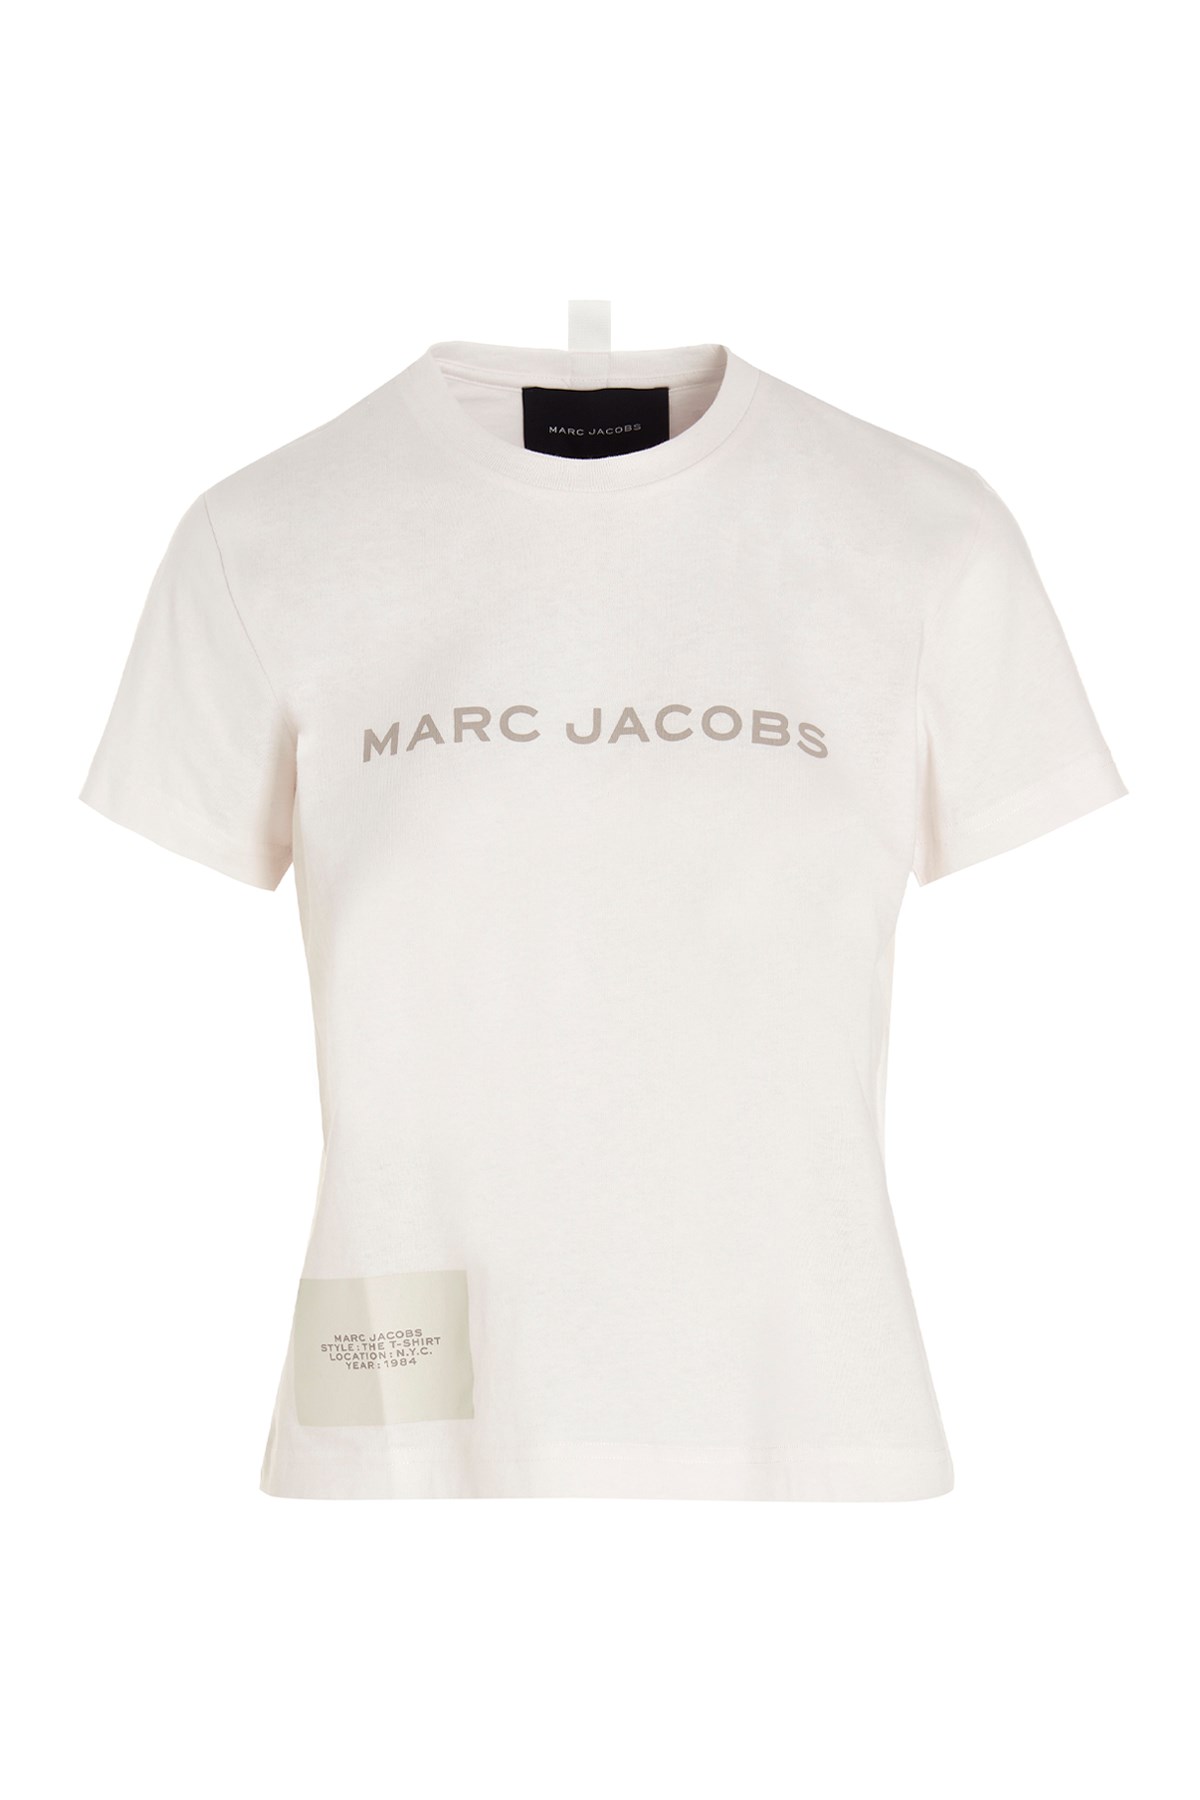 MARC JACOBS Logo Printed T-Shirt